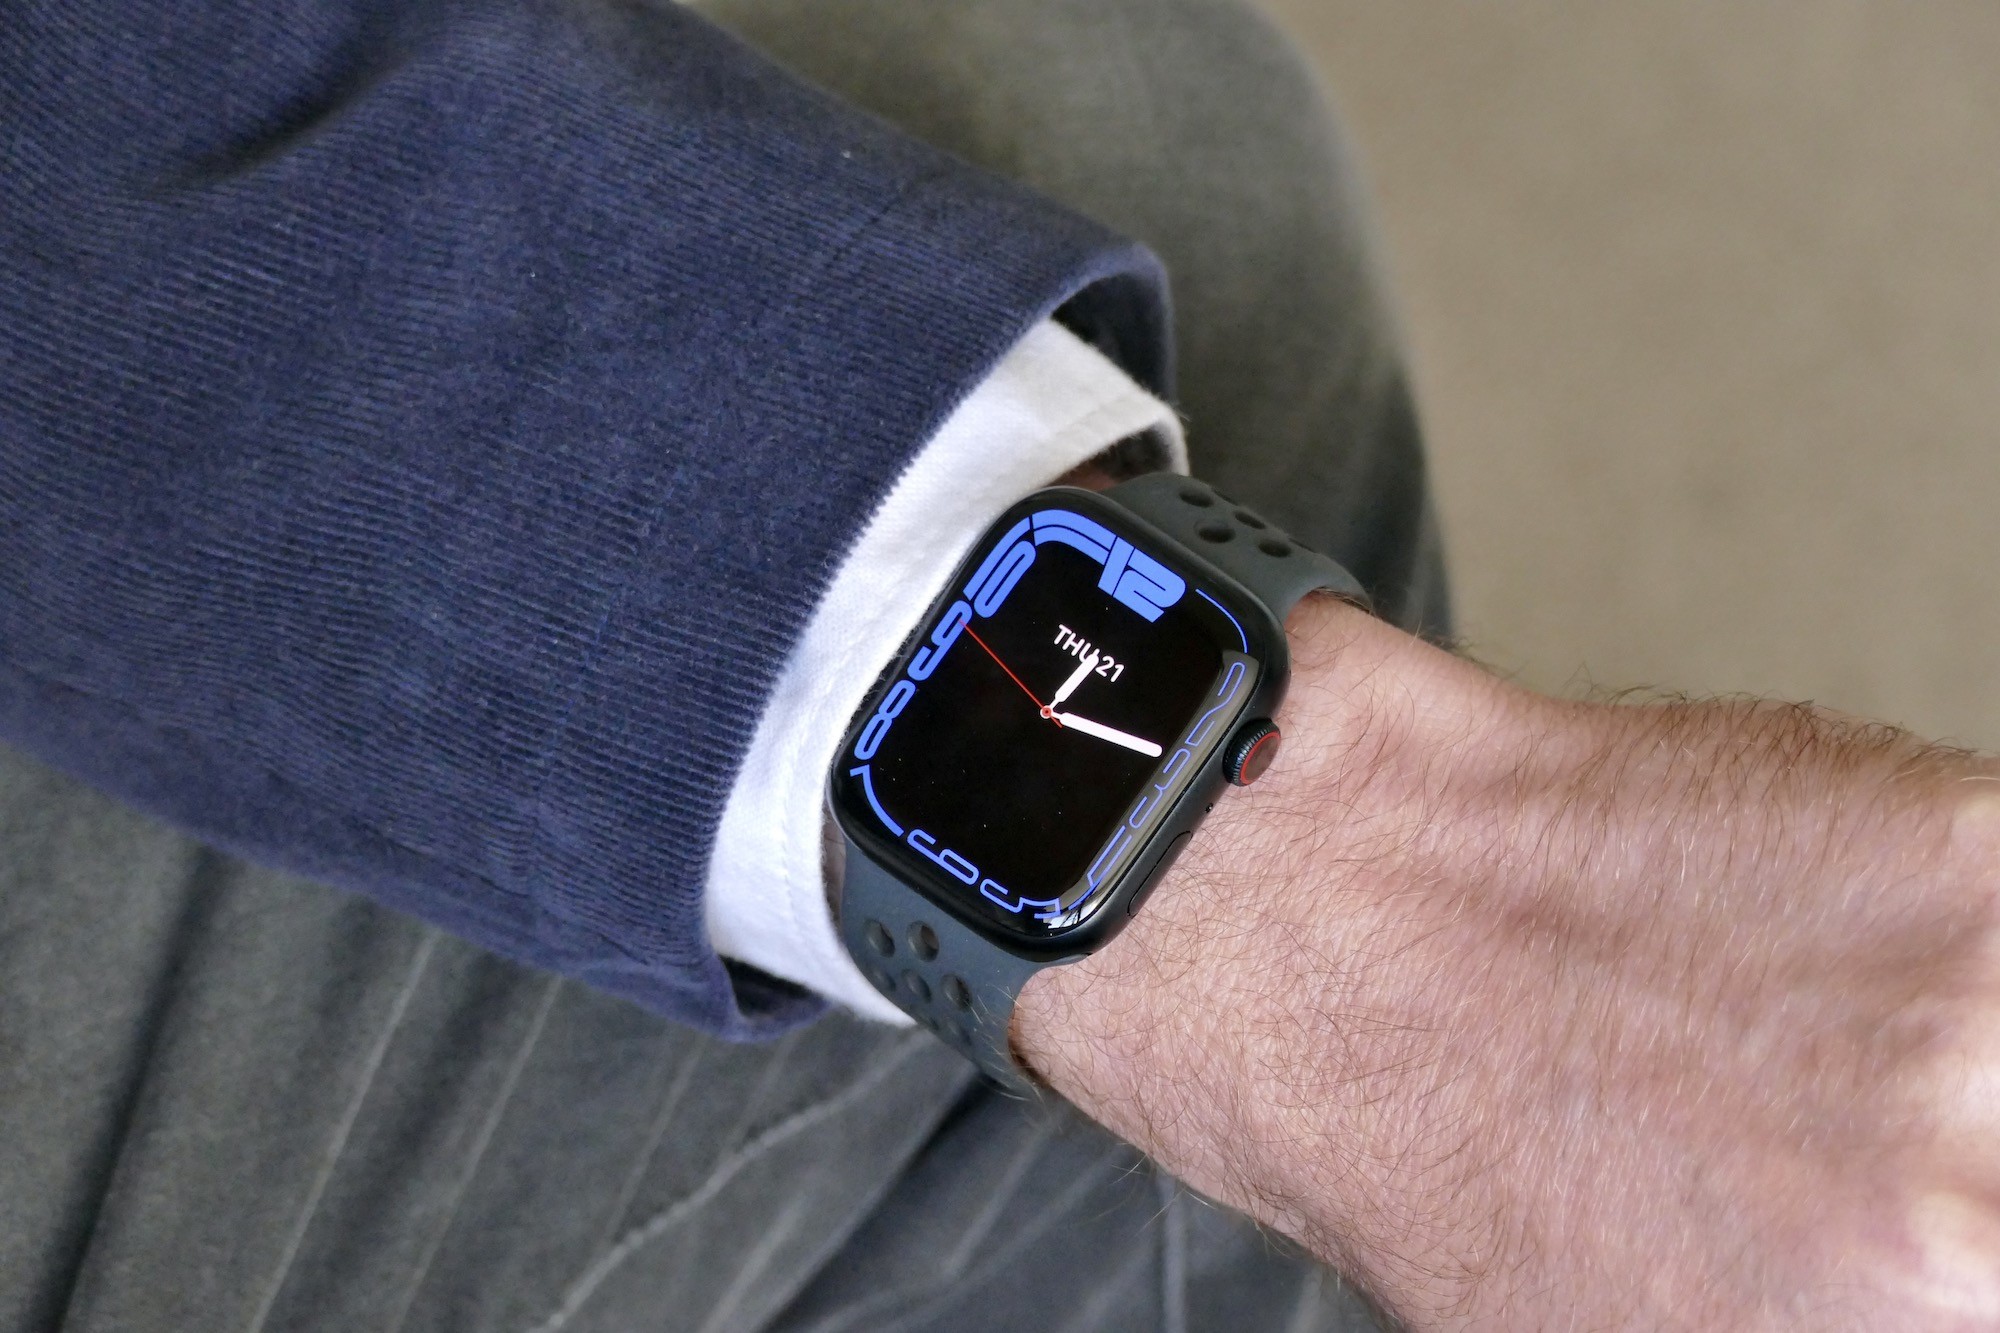 https://www.digitaltrends.com/wp-content/uploads/2022/04/apple-watch-worn-on-wrist.jpg?p=1